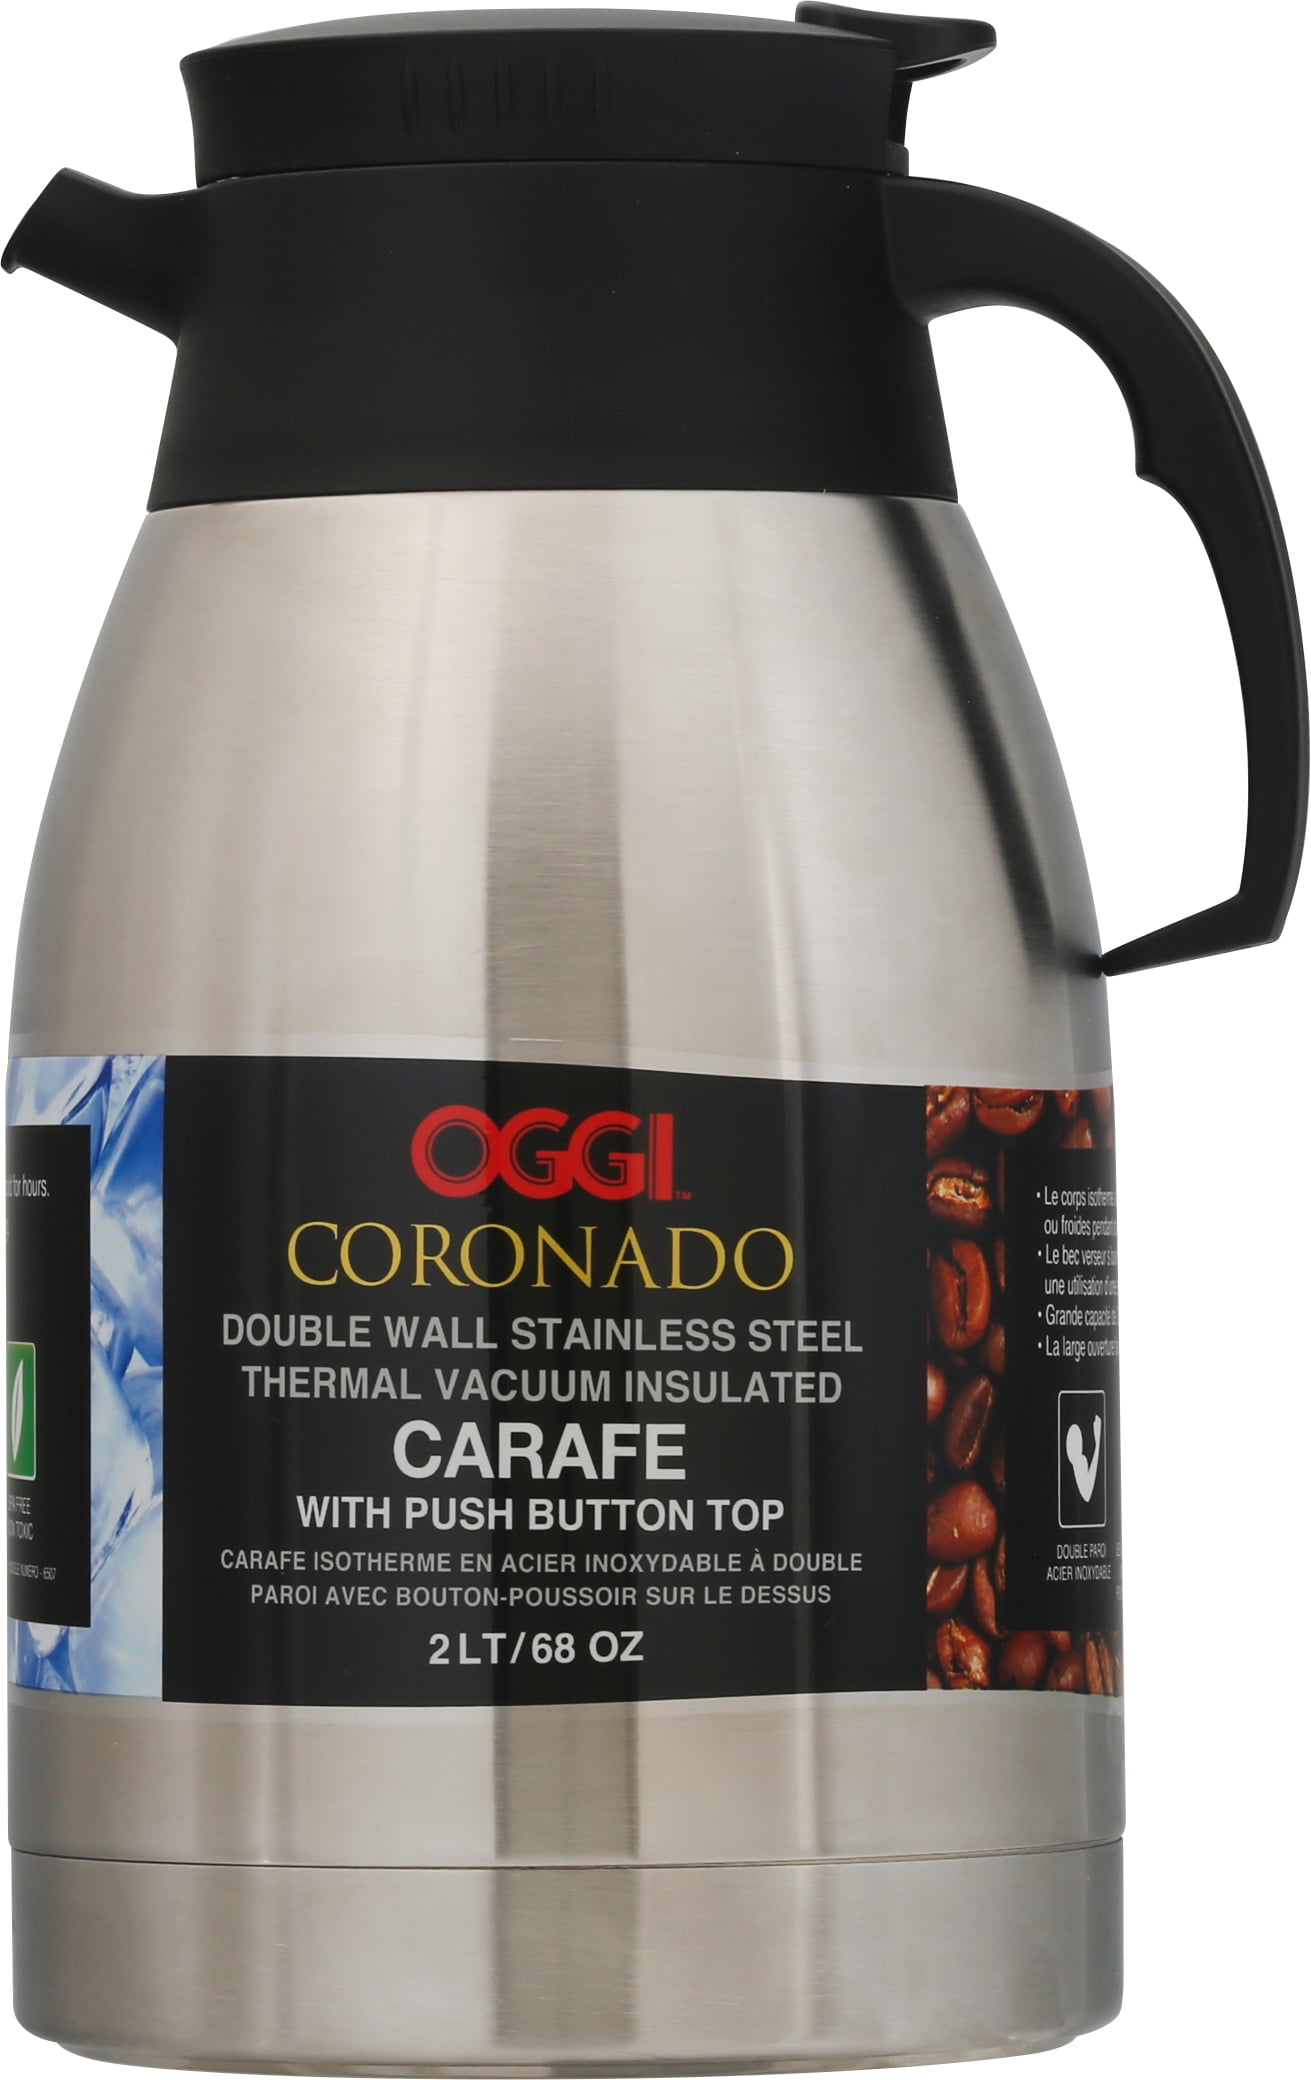 Restpresso 20 oz Black Thermal Coffee Carafe / Server - 6 1/2 inch x 5 inch x 8 inch - 10 Count Box